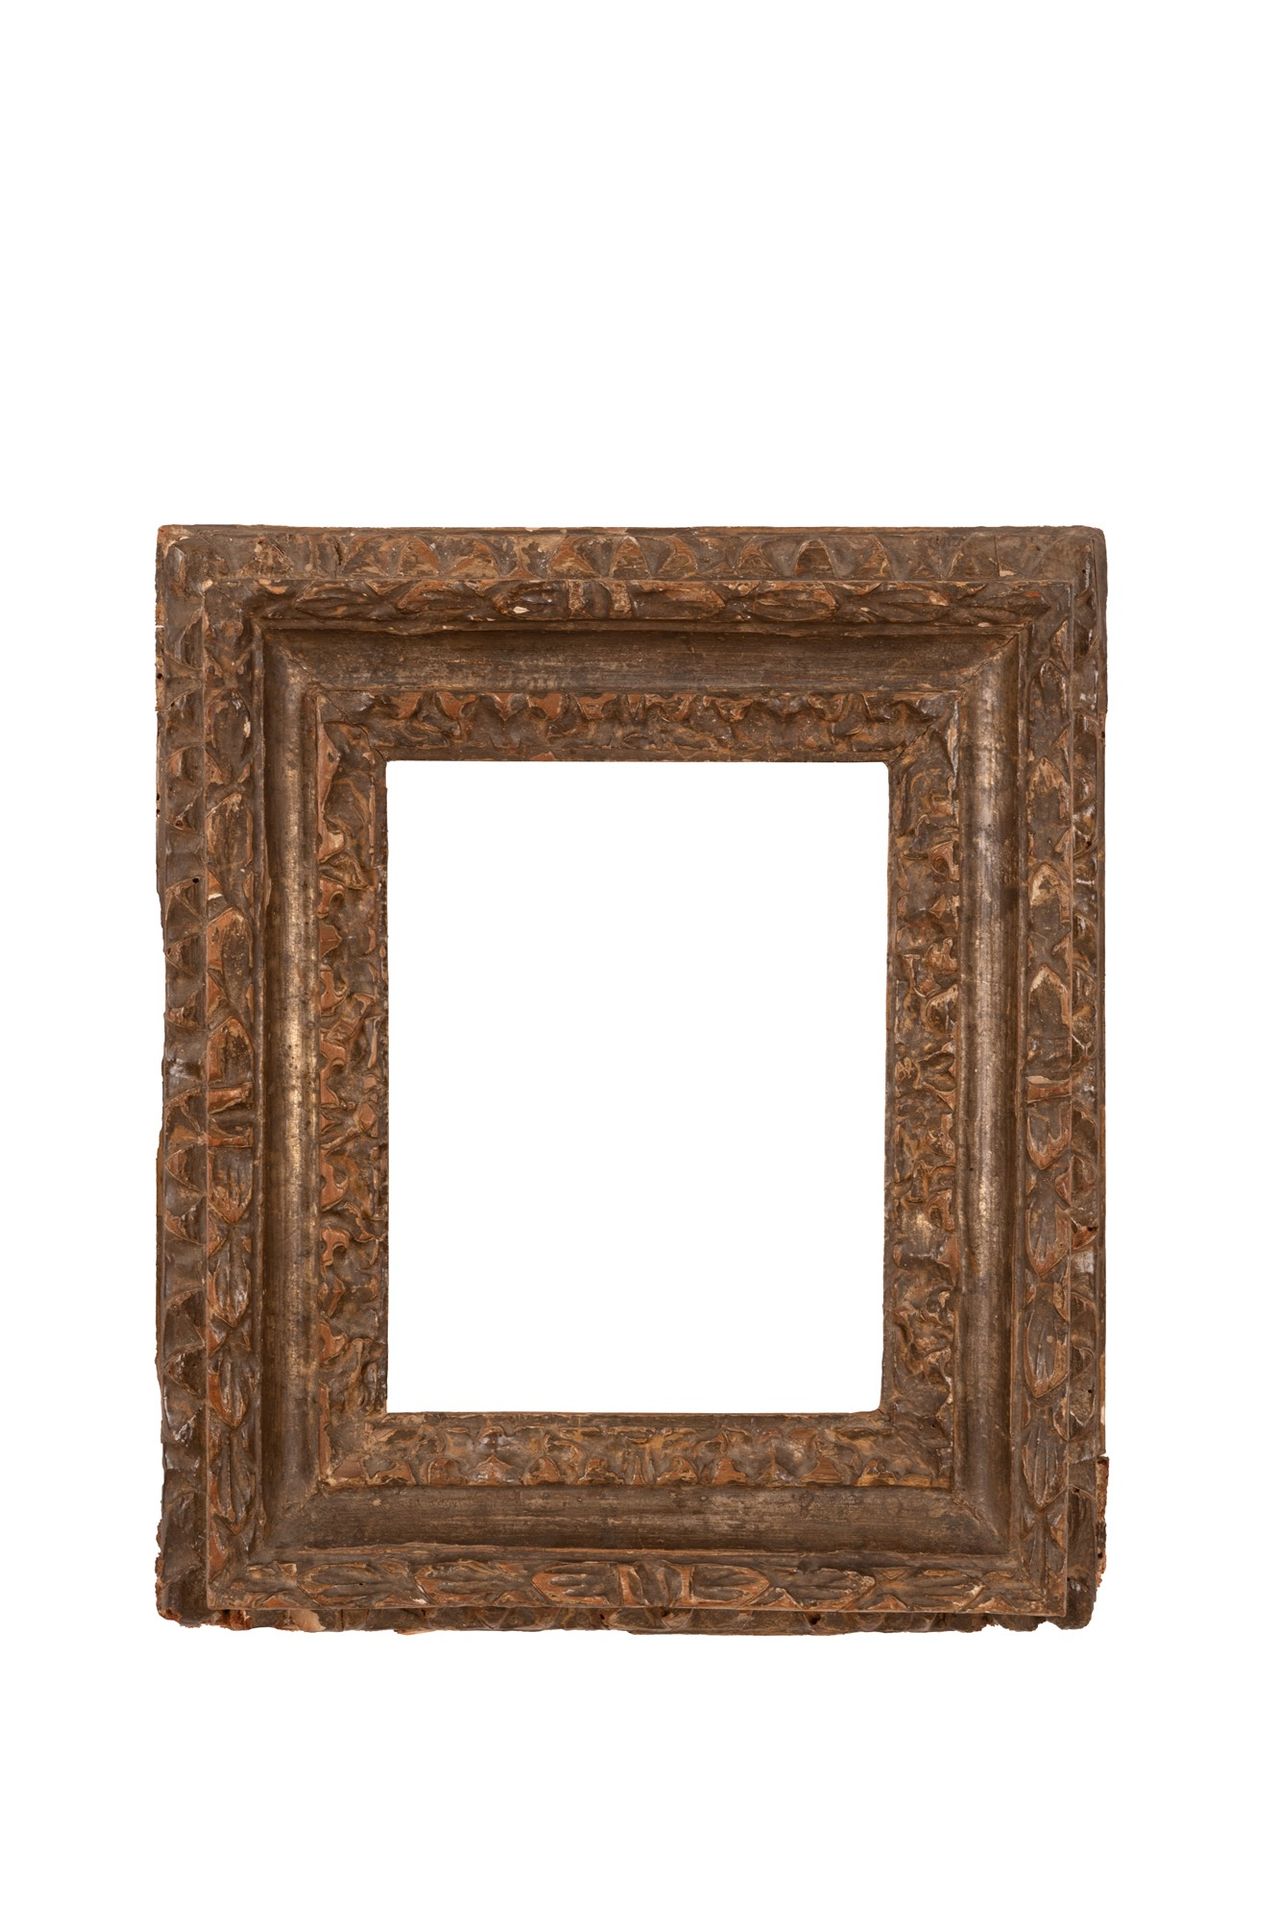 Cornice in legno XVII secolo 40x36 cm; Innenlicht 23x18 cm 17. Jahrhundert2